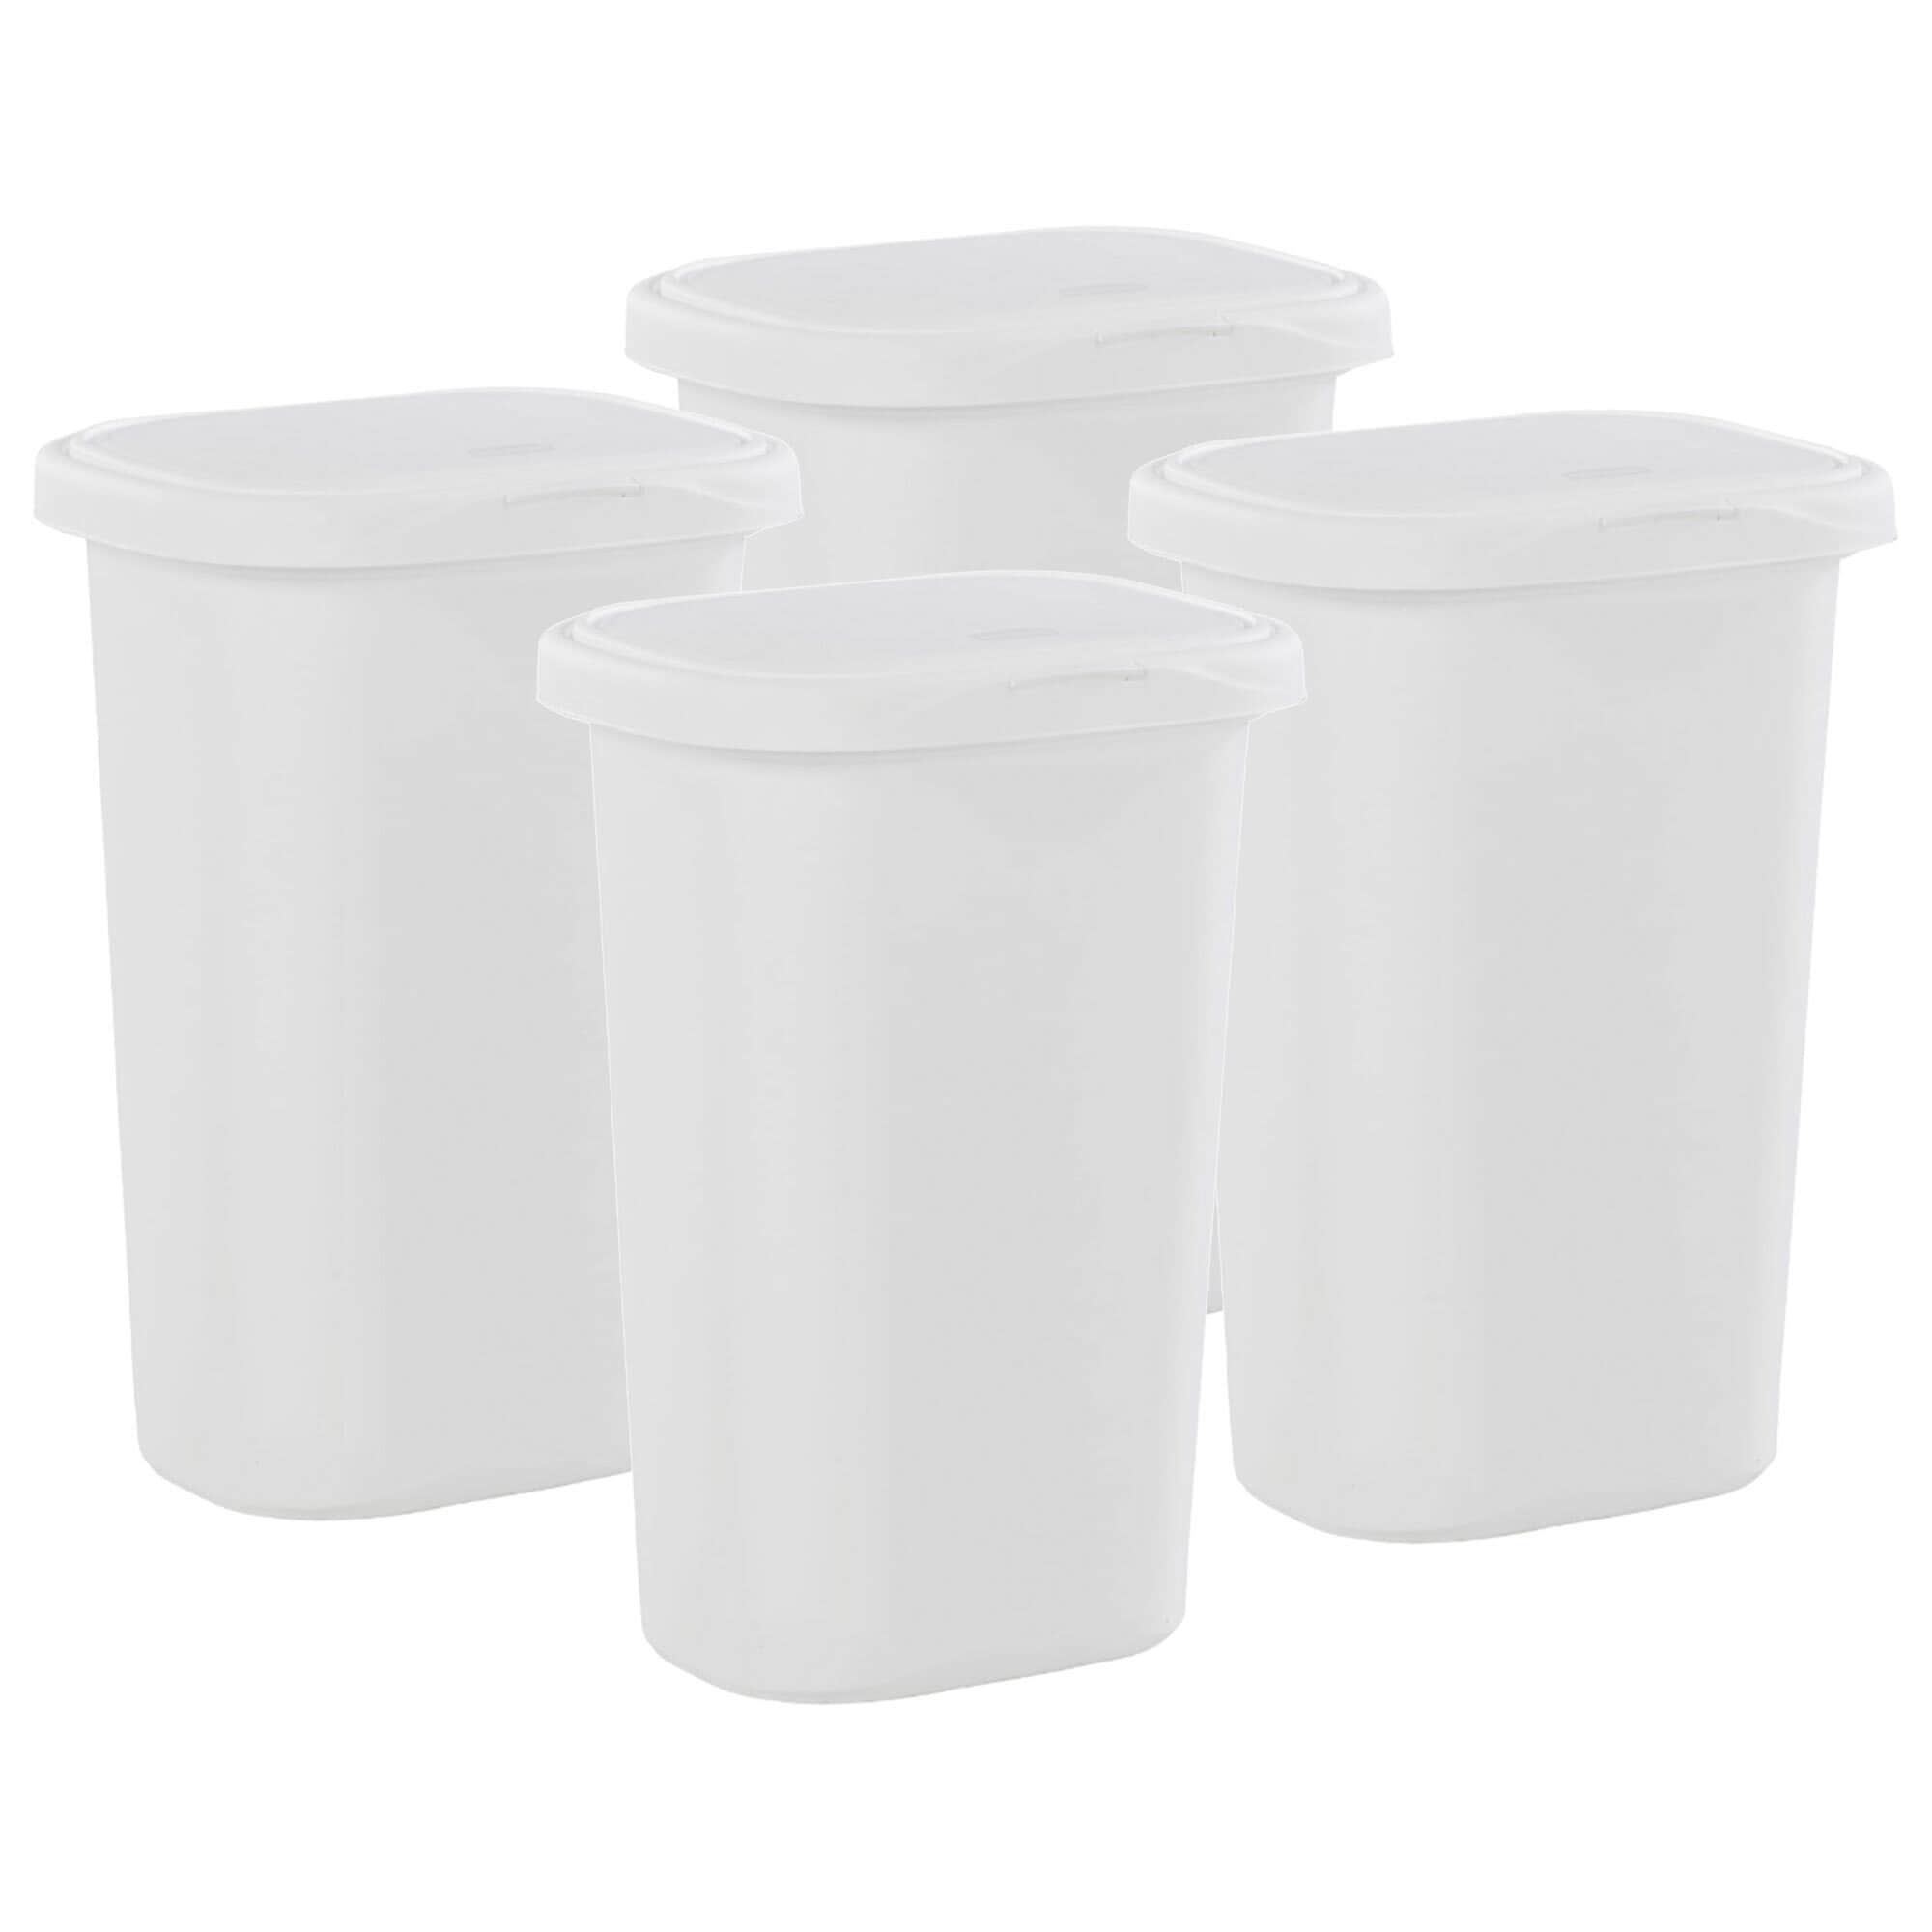 Rubbermaid® Soft Molded Plastic Small Wastebasket, 13-5/8 Gallon Capacity,  Black